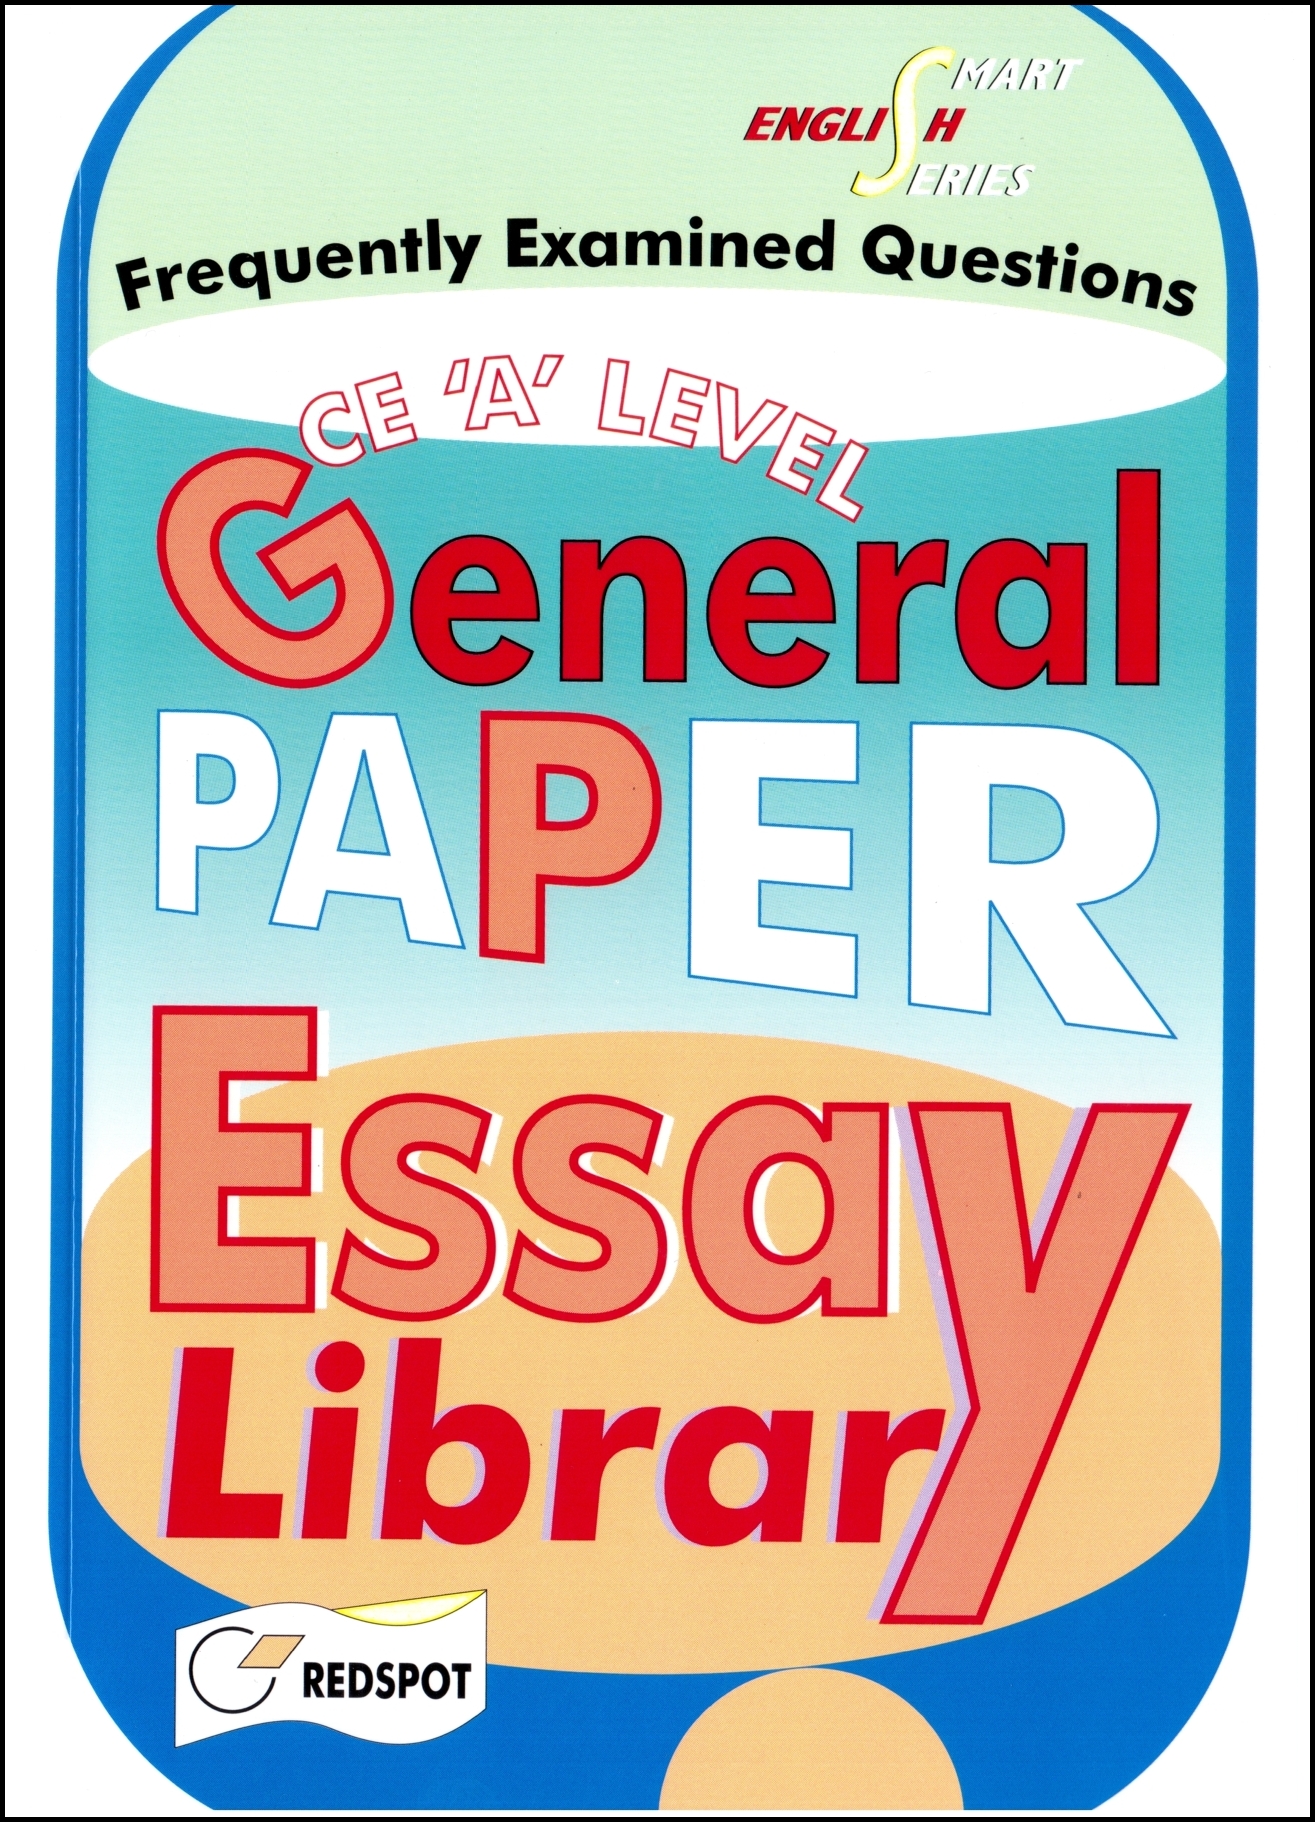 REDSPOT  A Level General Paper Essay Library.